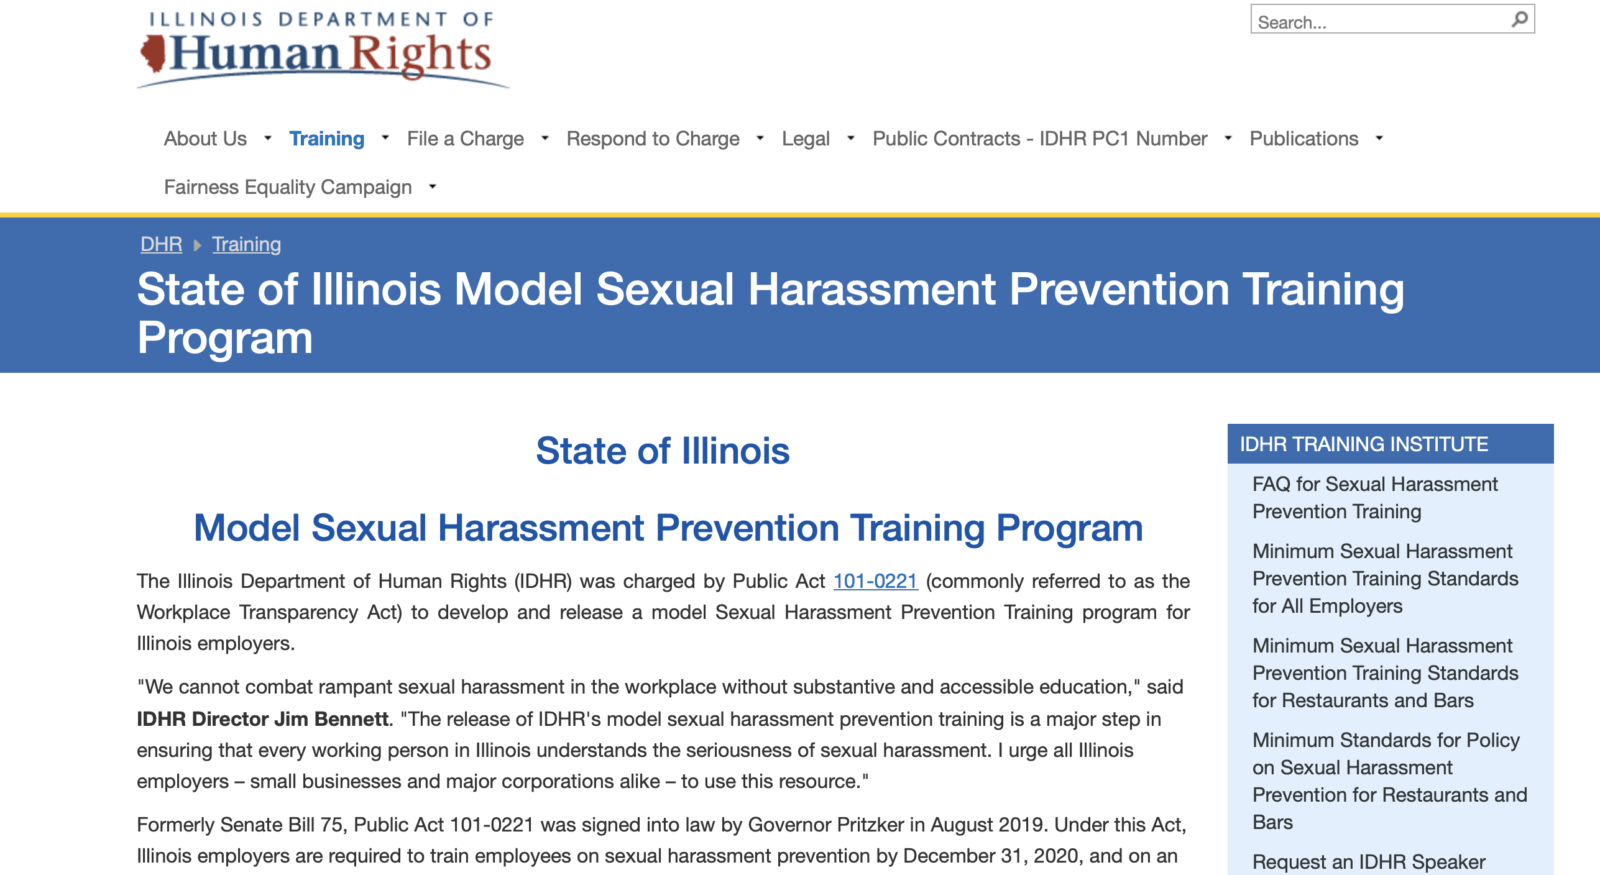 Minimum Sexual Harassment Prevention Training Standards